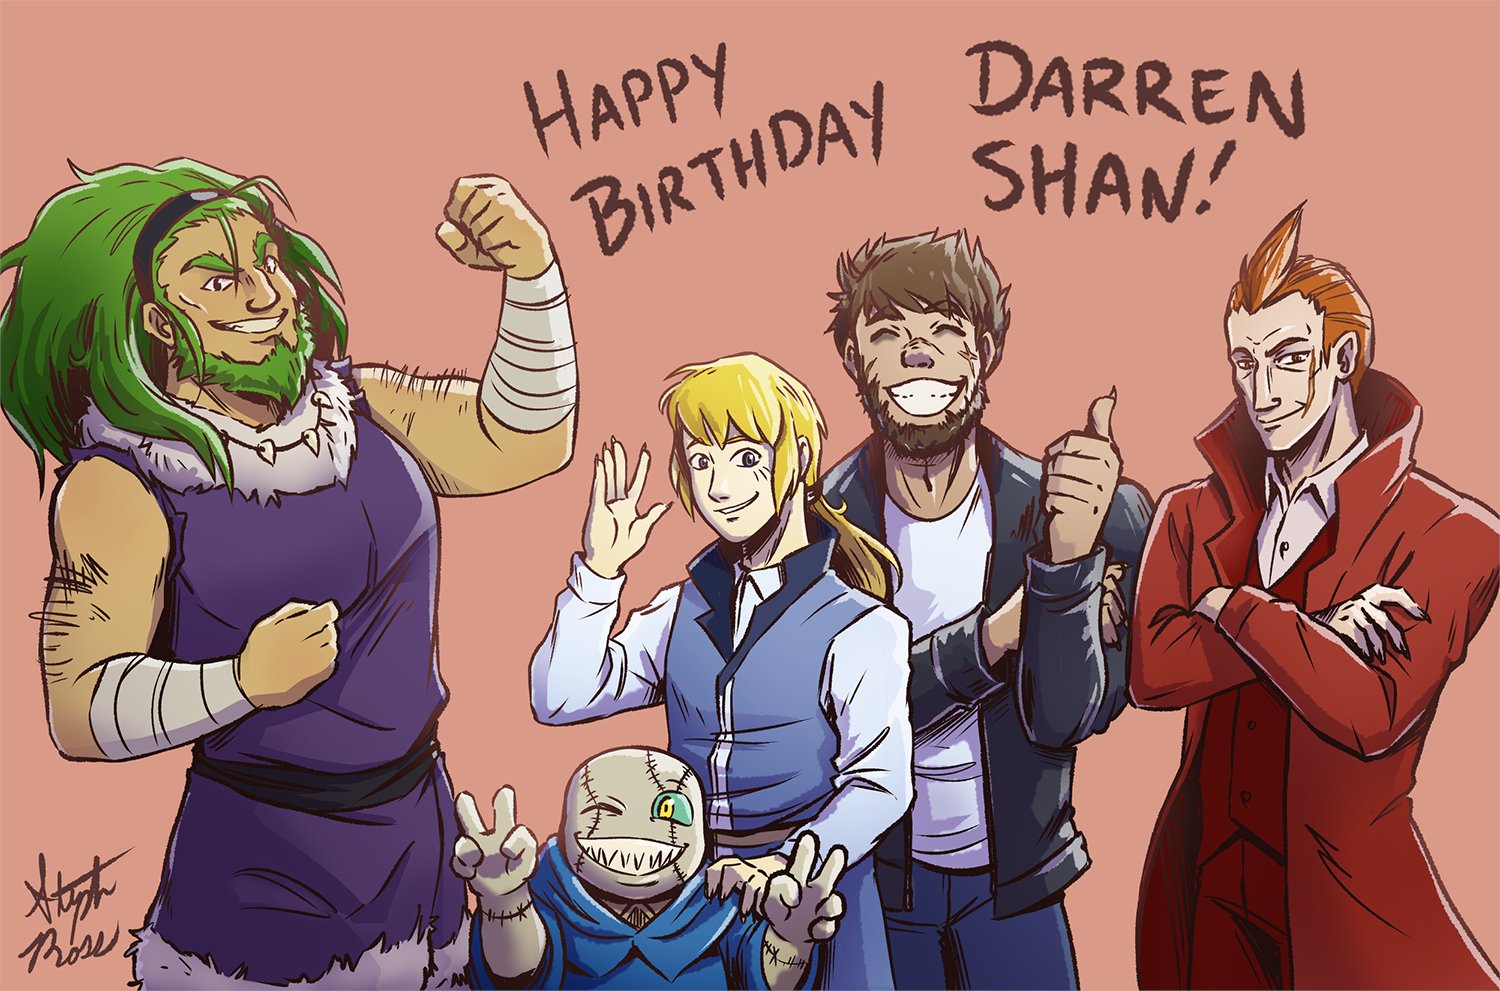 Happy birthday Darren Shan!  